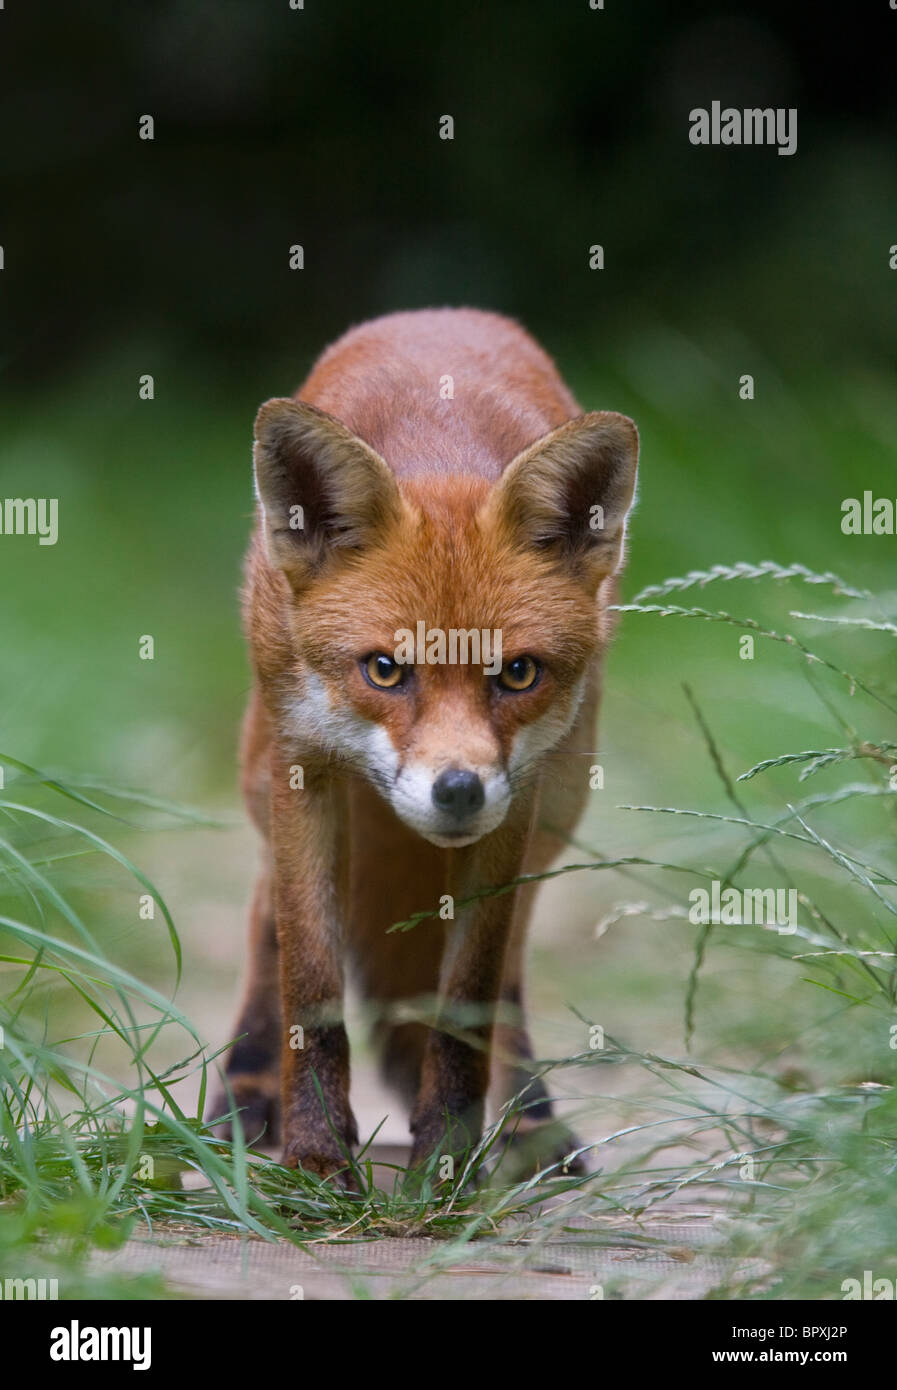 EUROPEAN RED FOX (Vulpes vulpes) in urban garden, South London, UK. Stock Photo